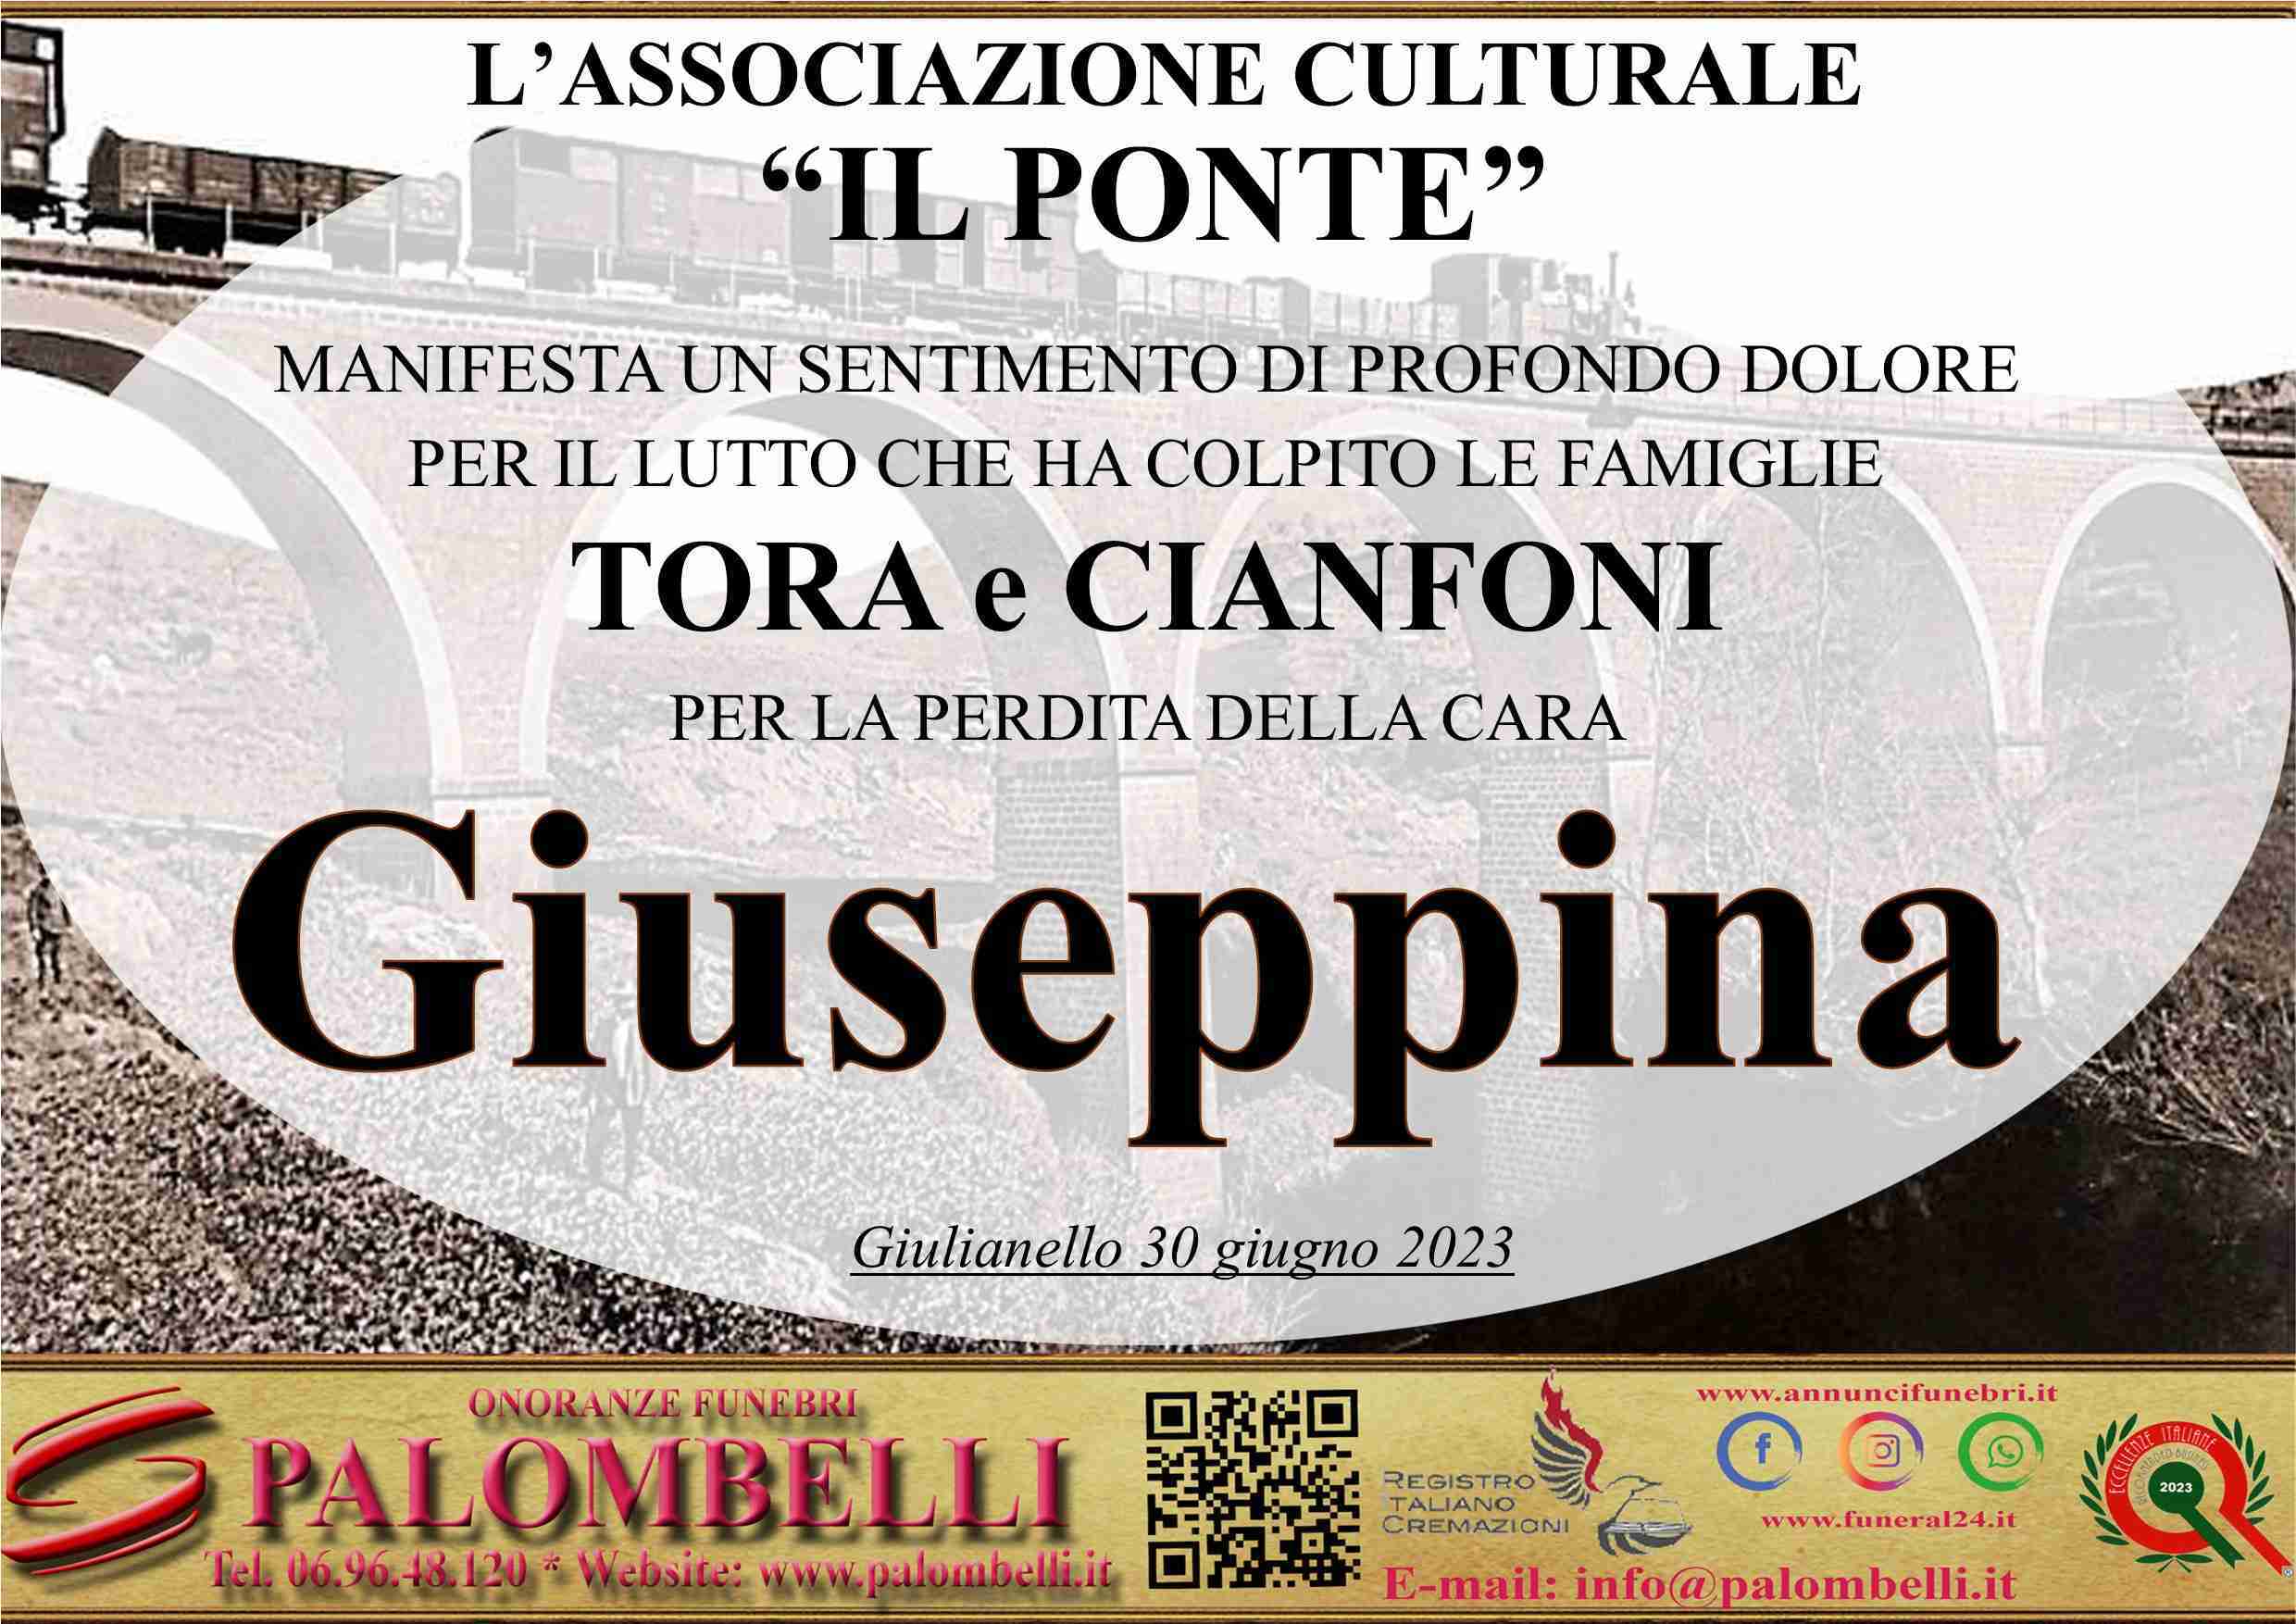 Giuseppina Tora